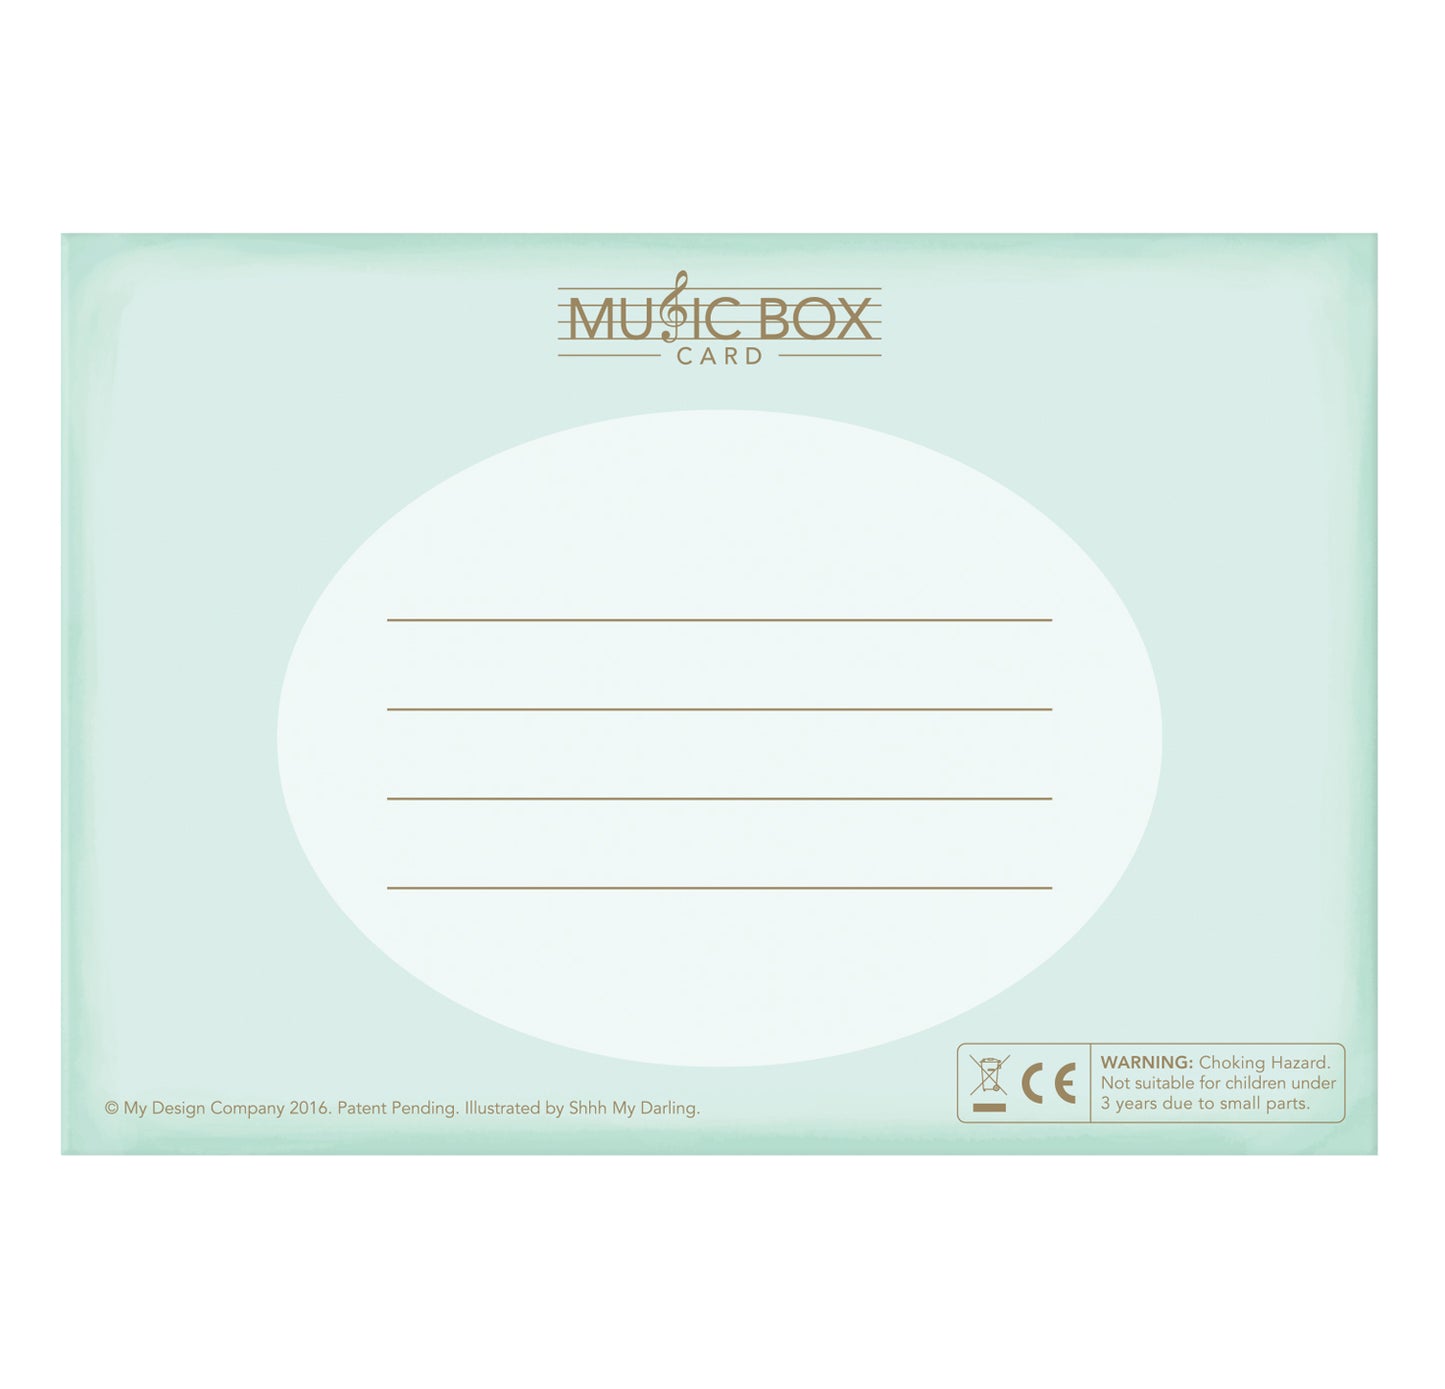 London Adventure Music Box Card Novelty Dancing Musical Greeting Card